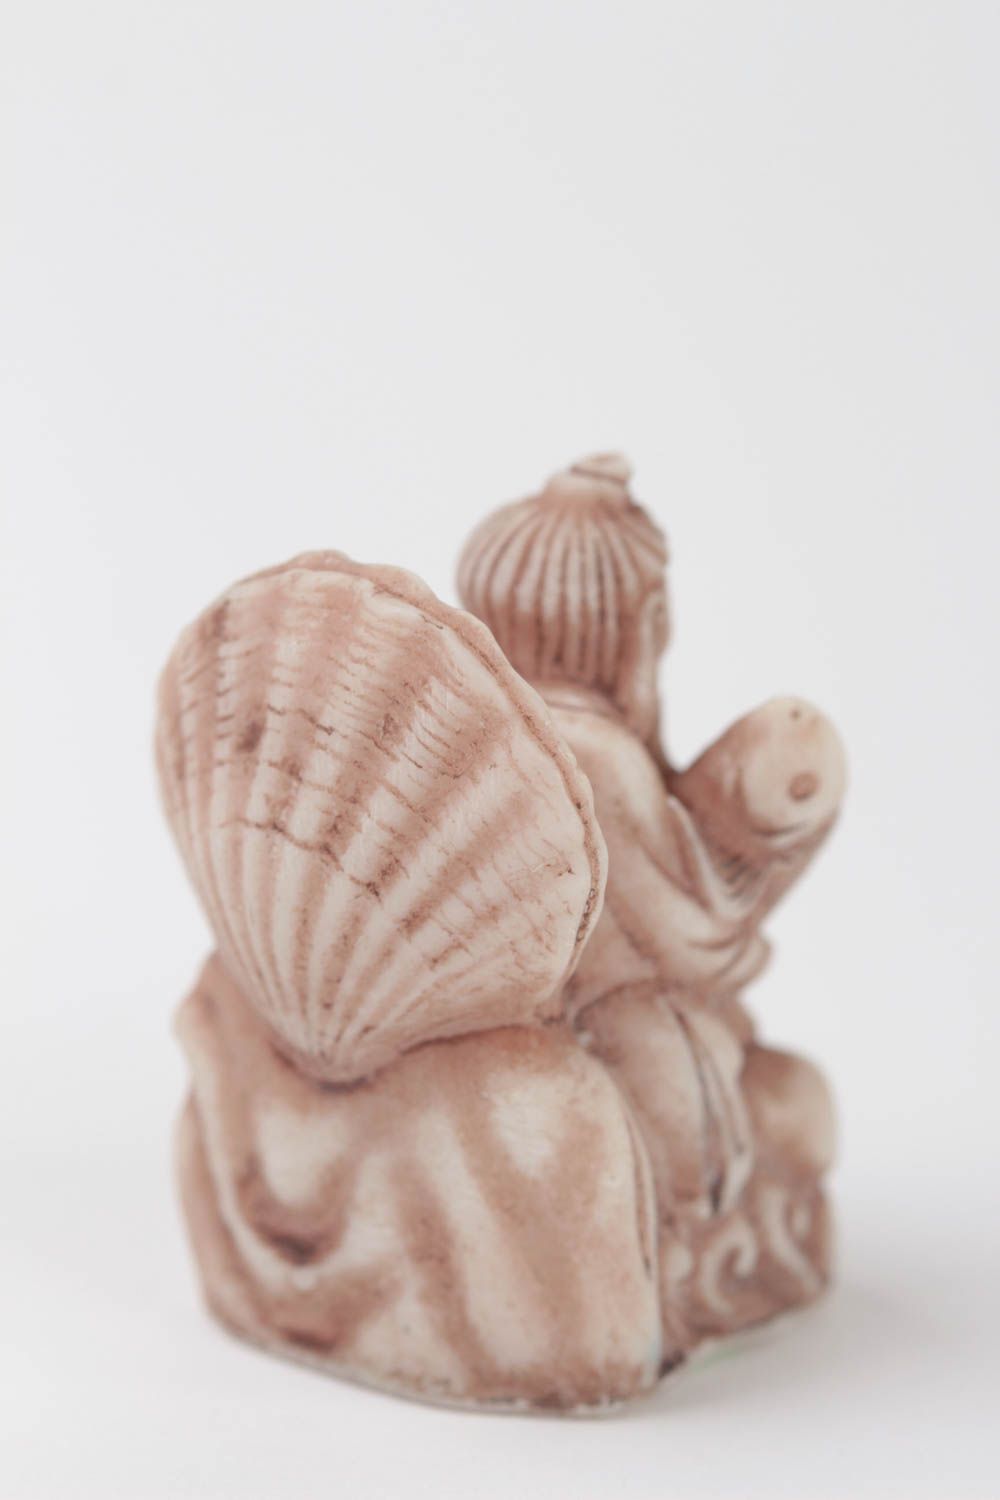 Figura de resina polimérica artesanal regalo para amigos decoración de interior foto 3